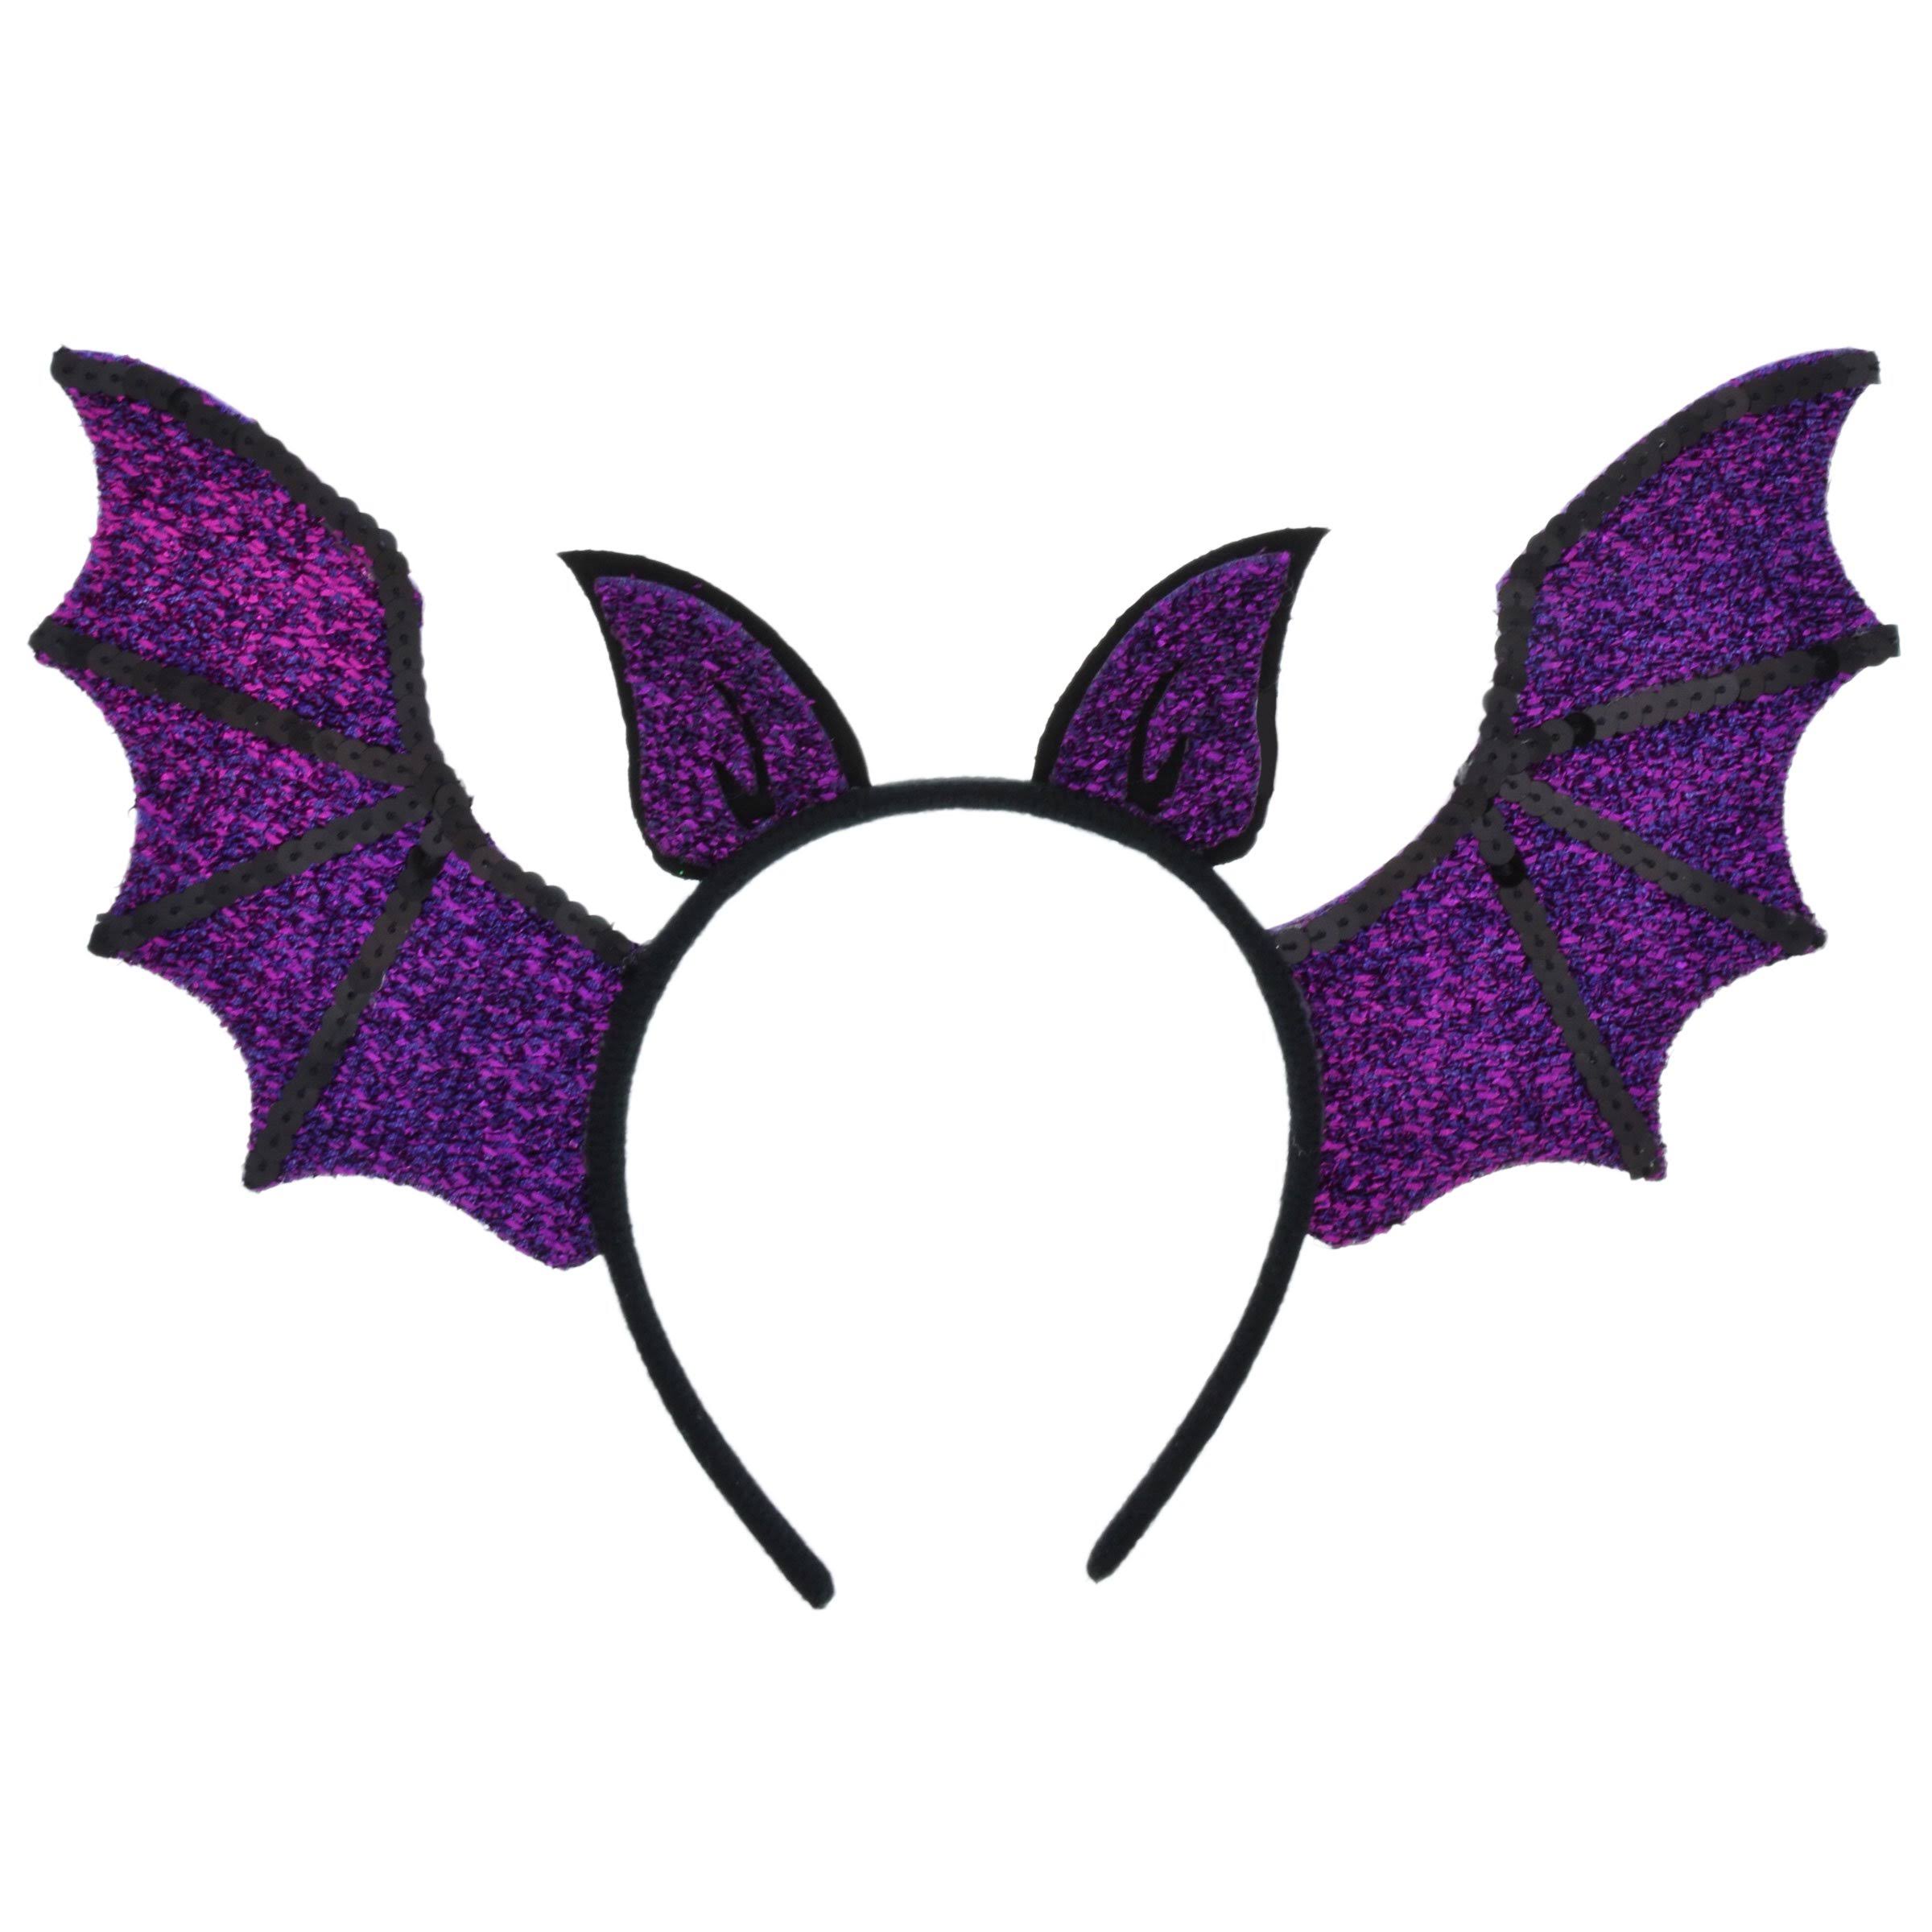 Case of Halloween-Themed Bat Wing Headbands (24 Units)